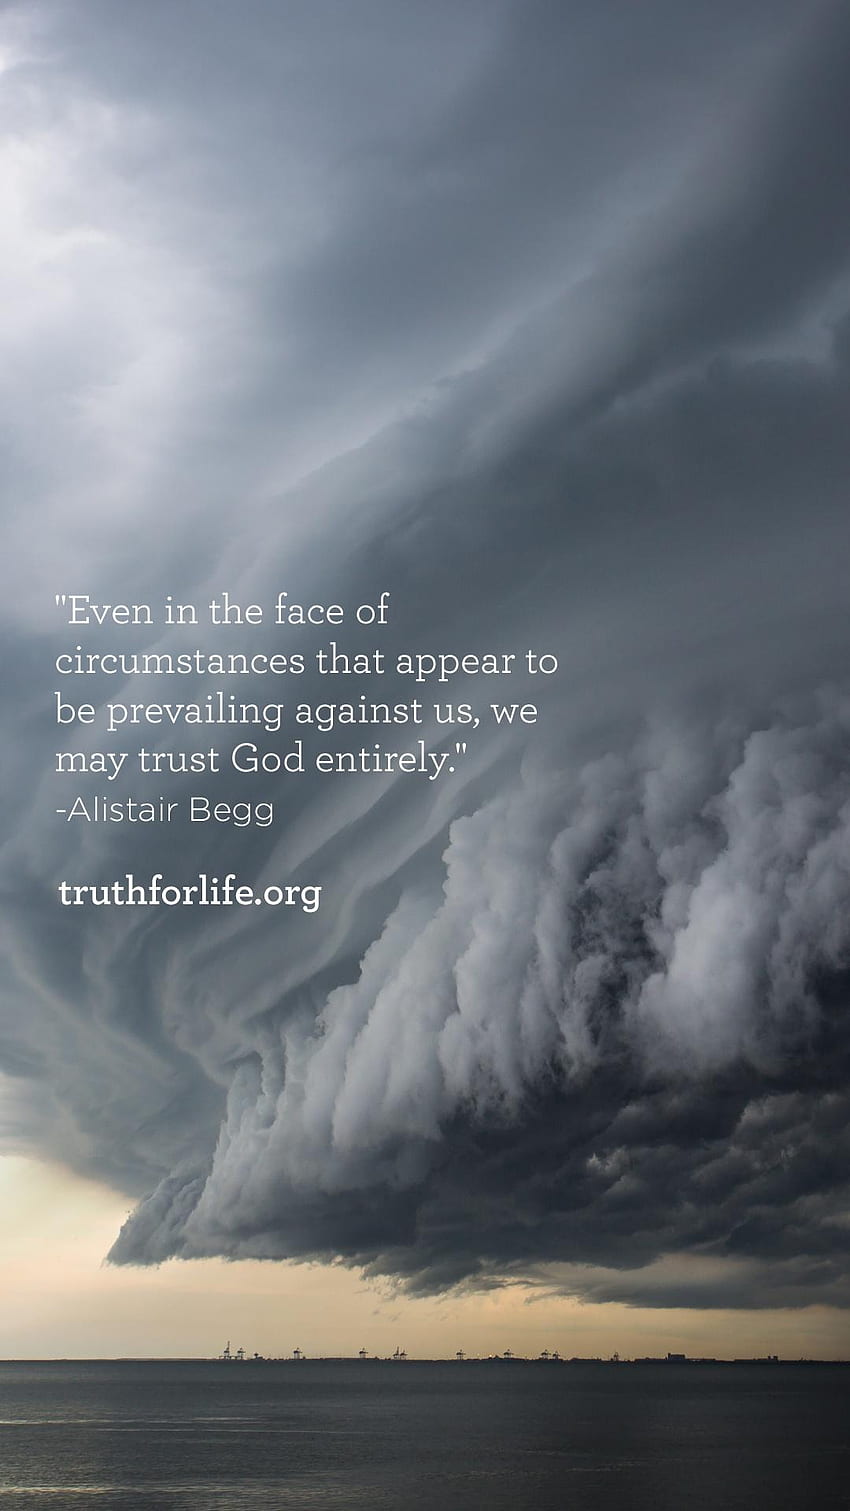 Trust God iPhone, Faith in God HD phone wallpaper